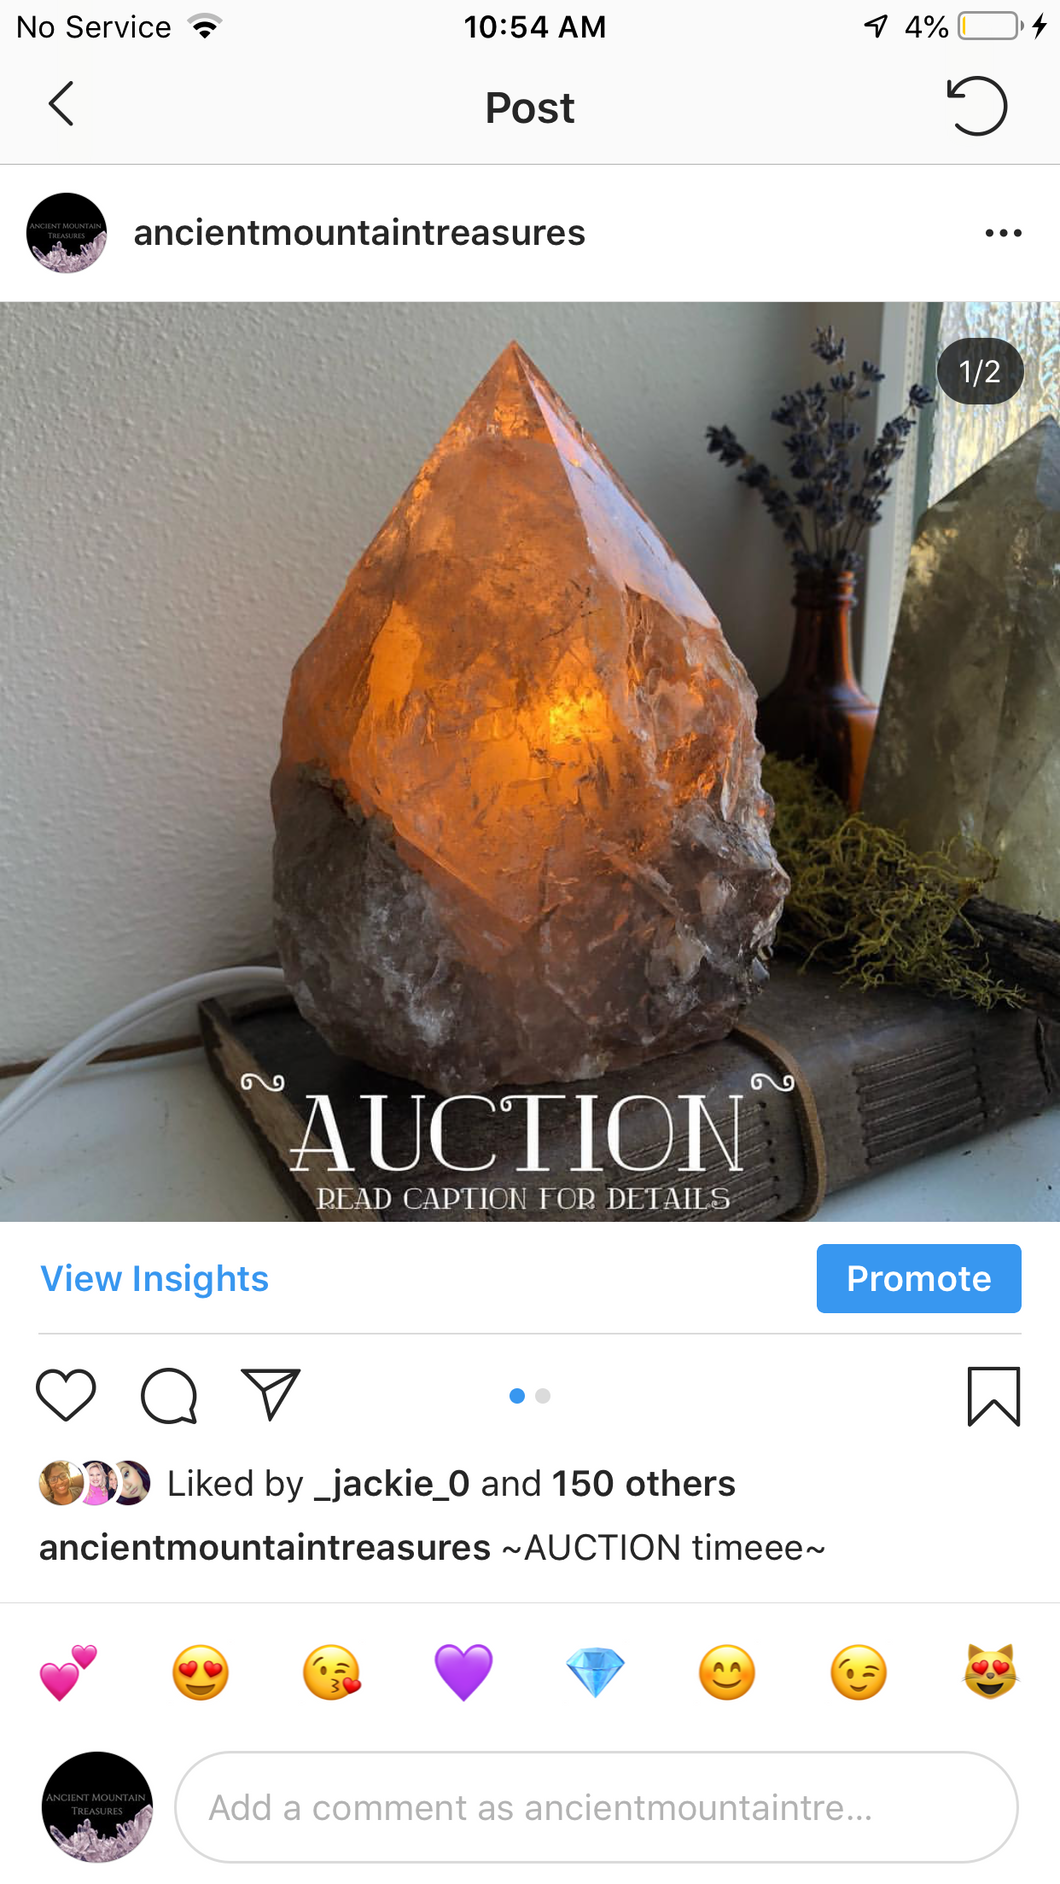 Auction for brennanv